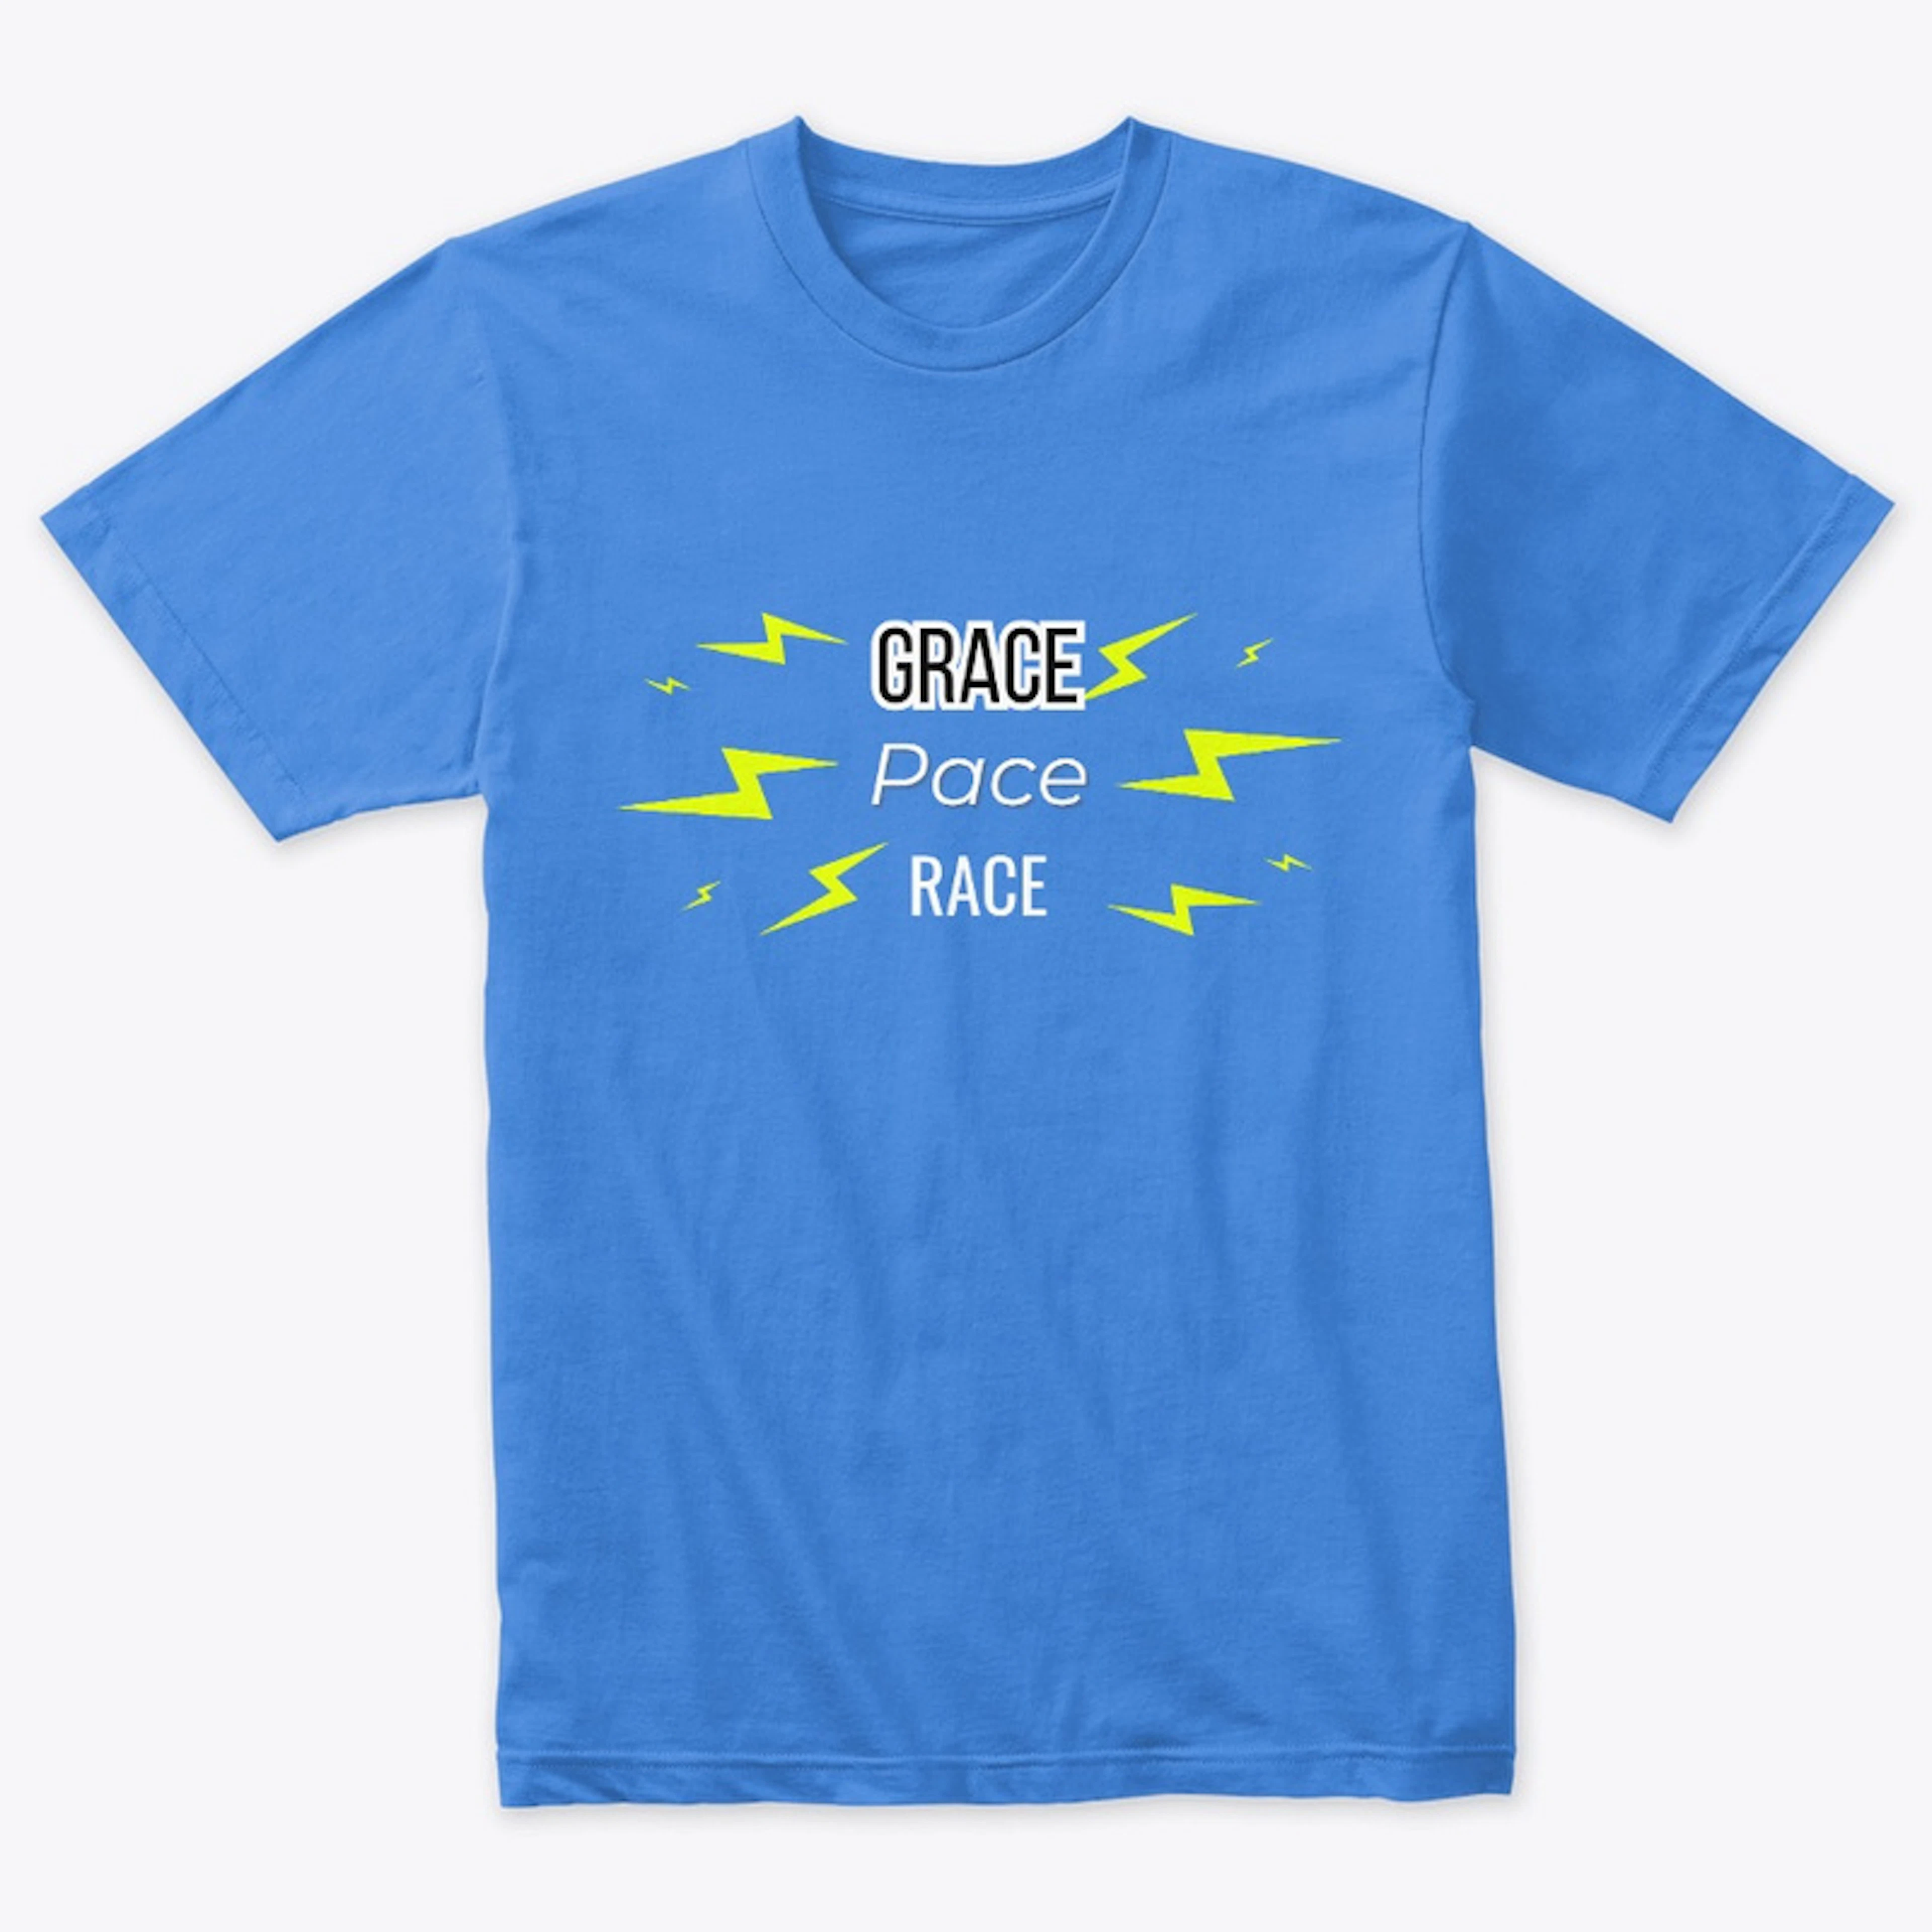 Grace, Pace, Race Collection